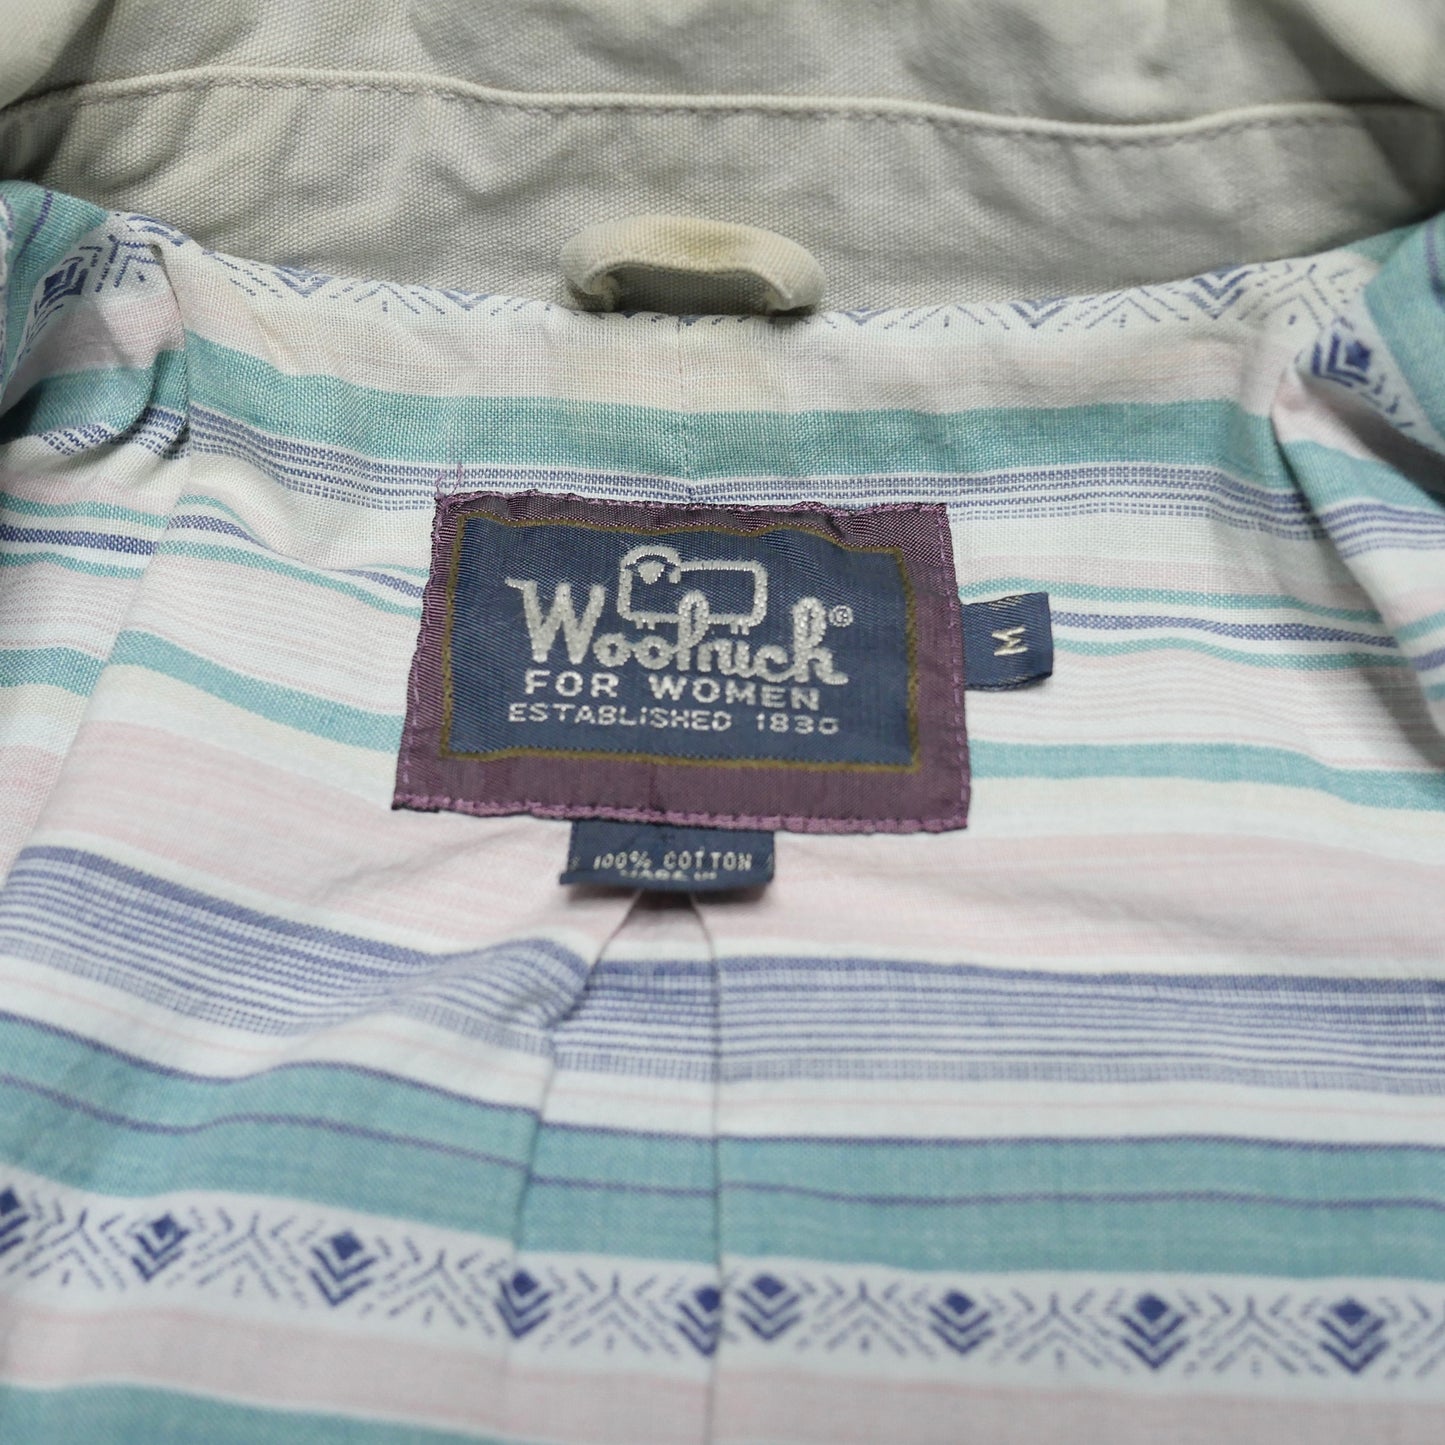 Woolrich Chore Jacket - Medium